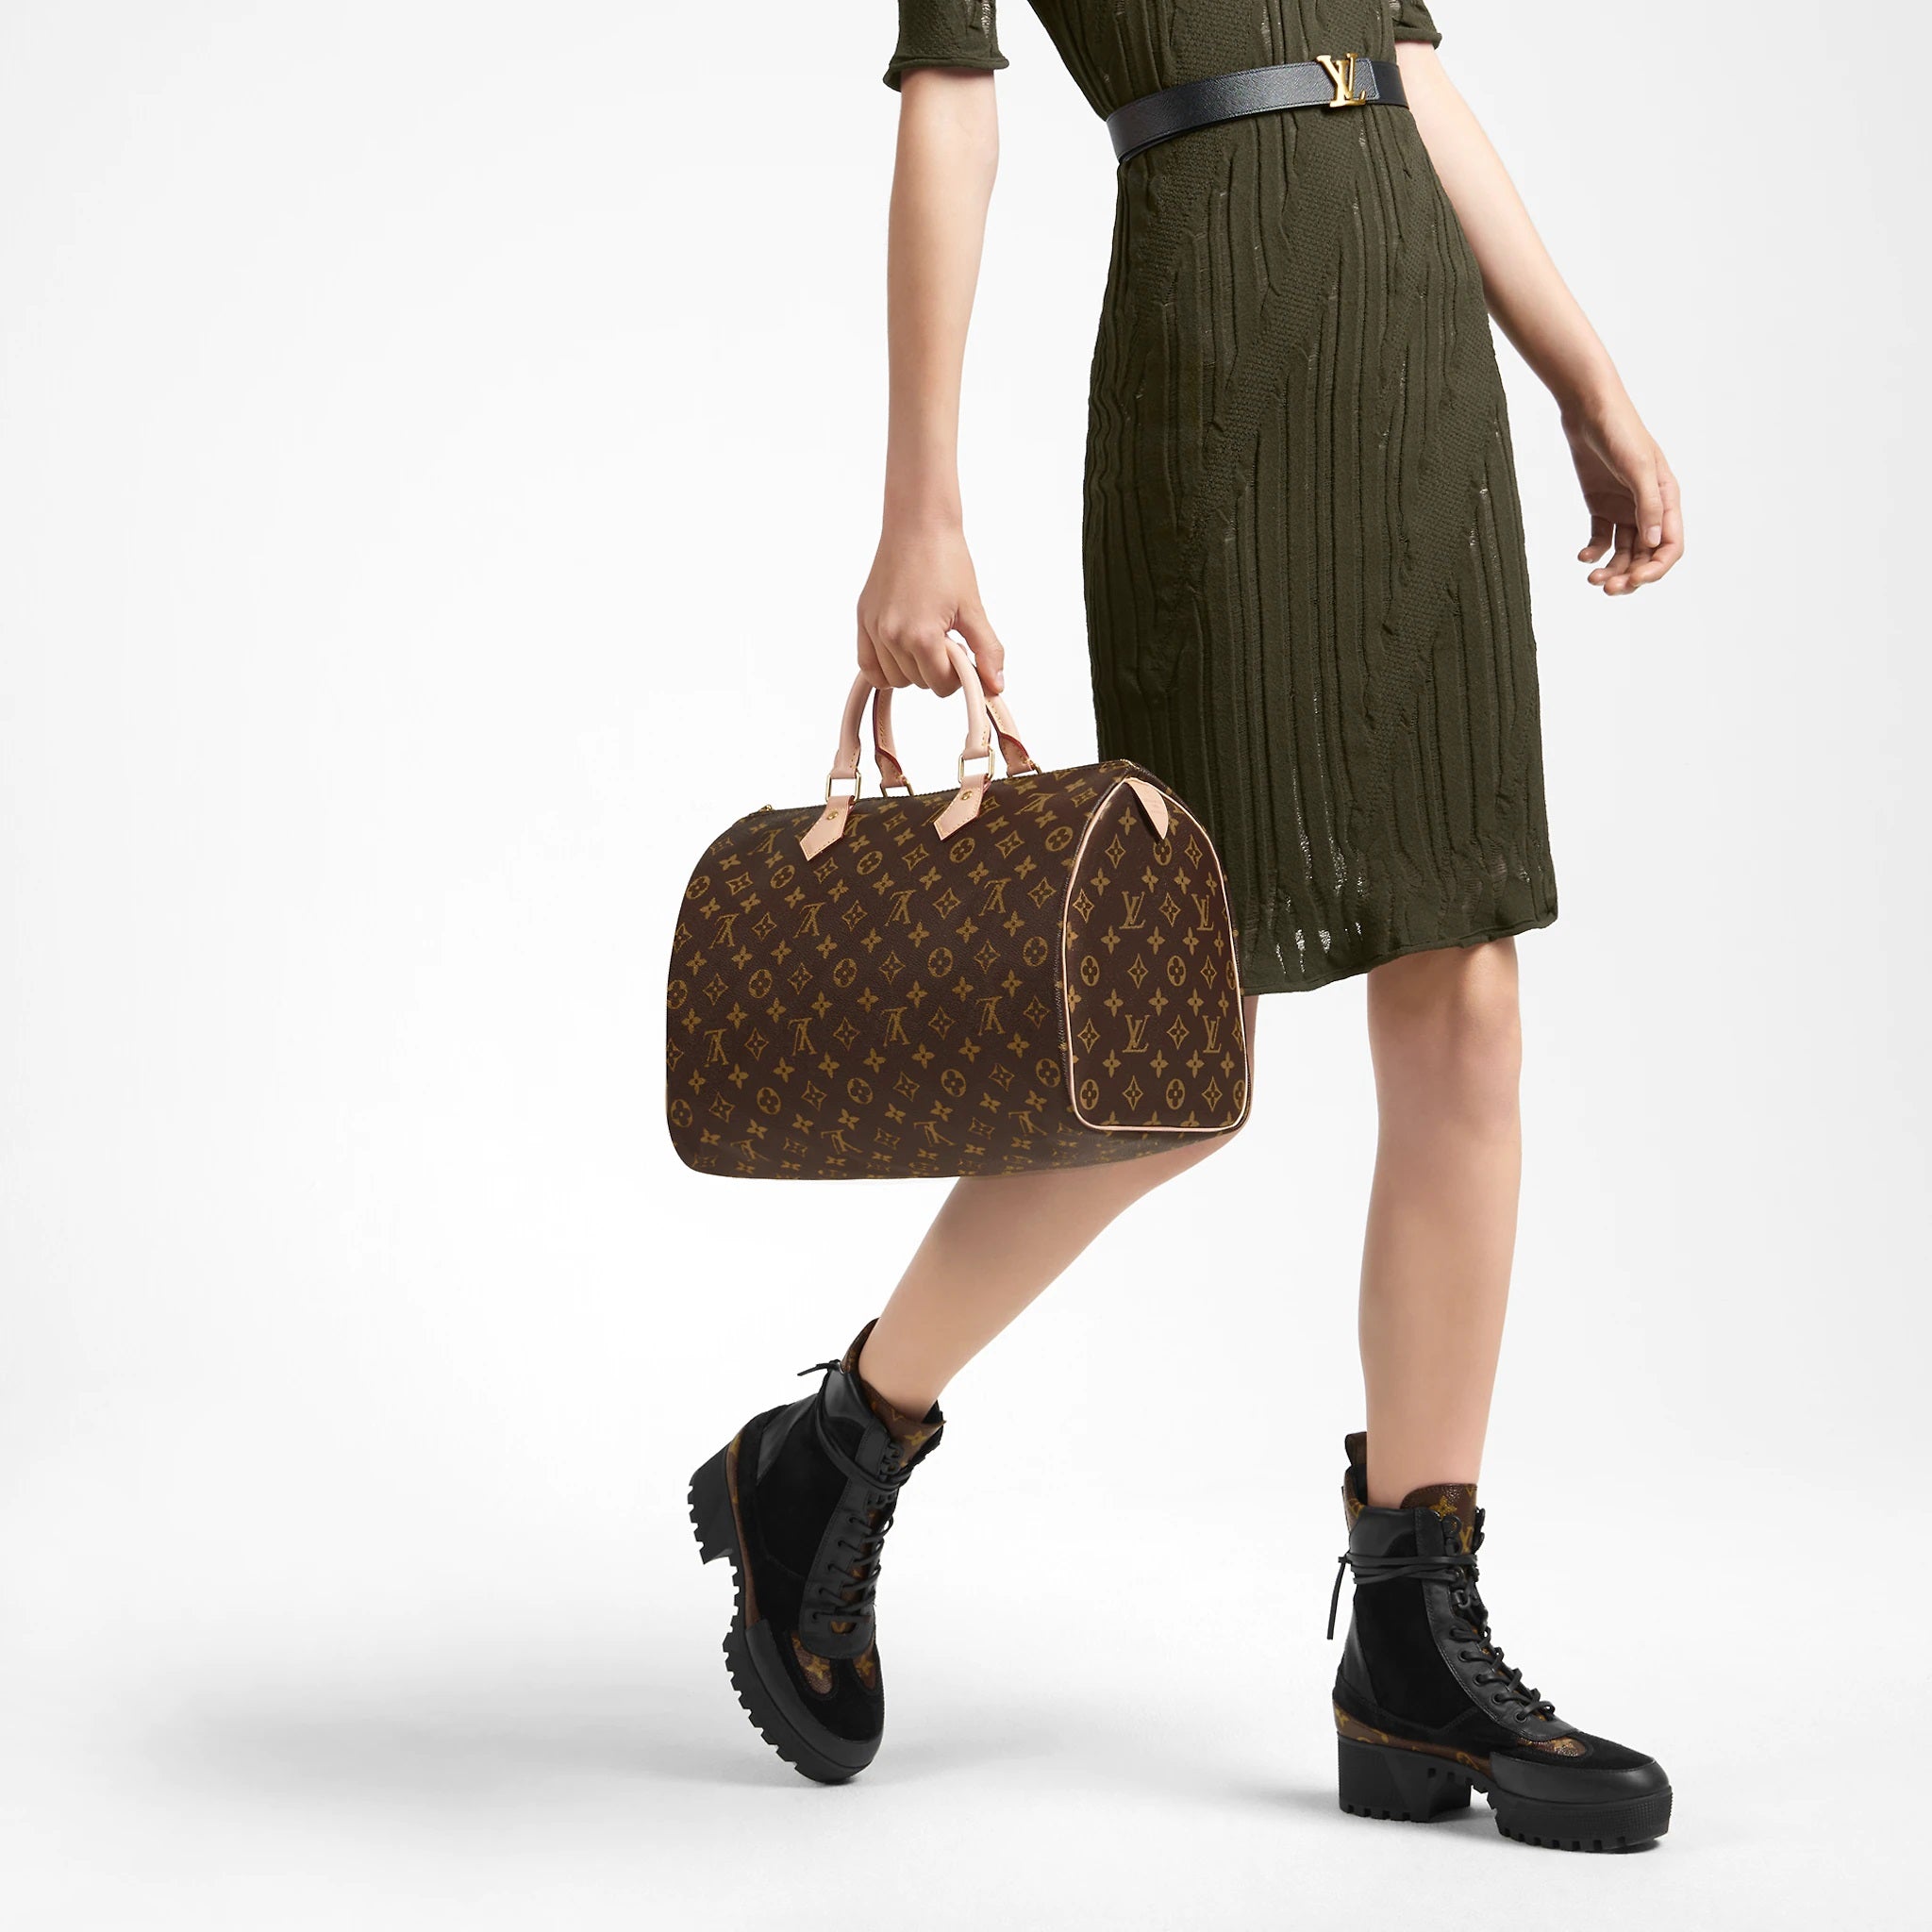 Which Louis Vuitton Handbag Is the Cheapest? Louis Vuitton Purses Under $1,500 Louis Vuitton Speedy 35 pures